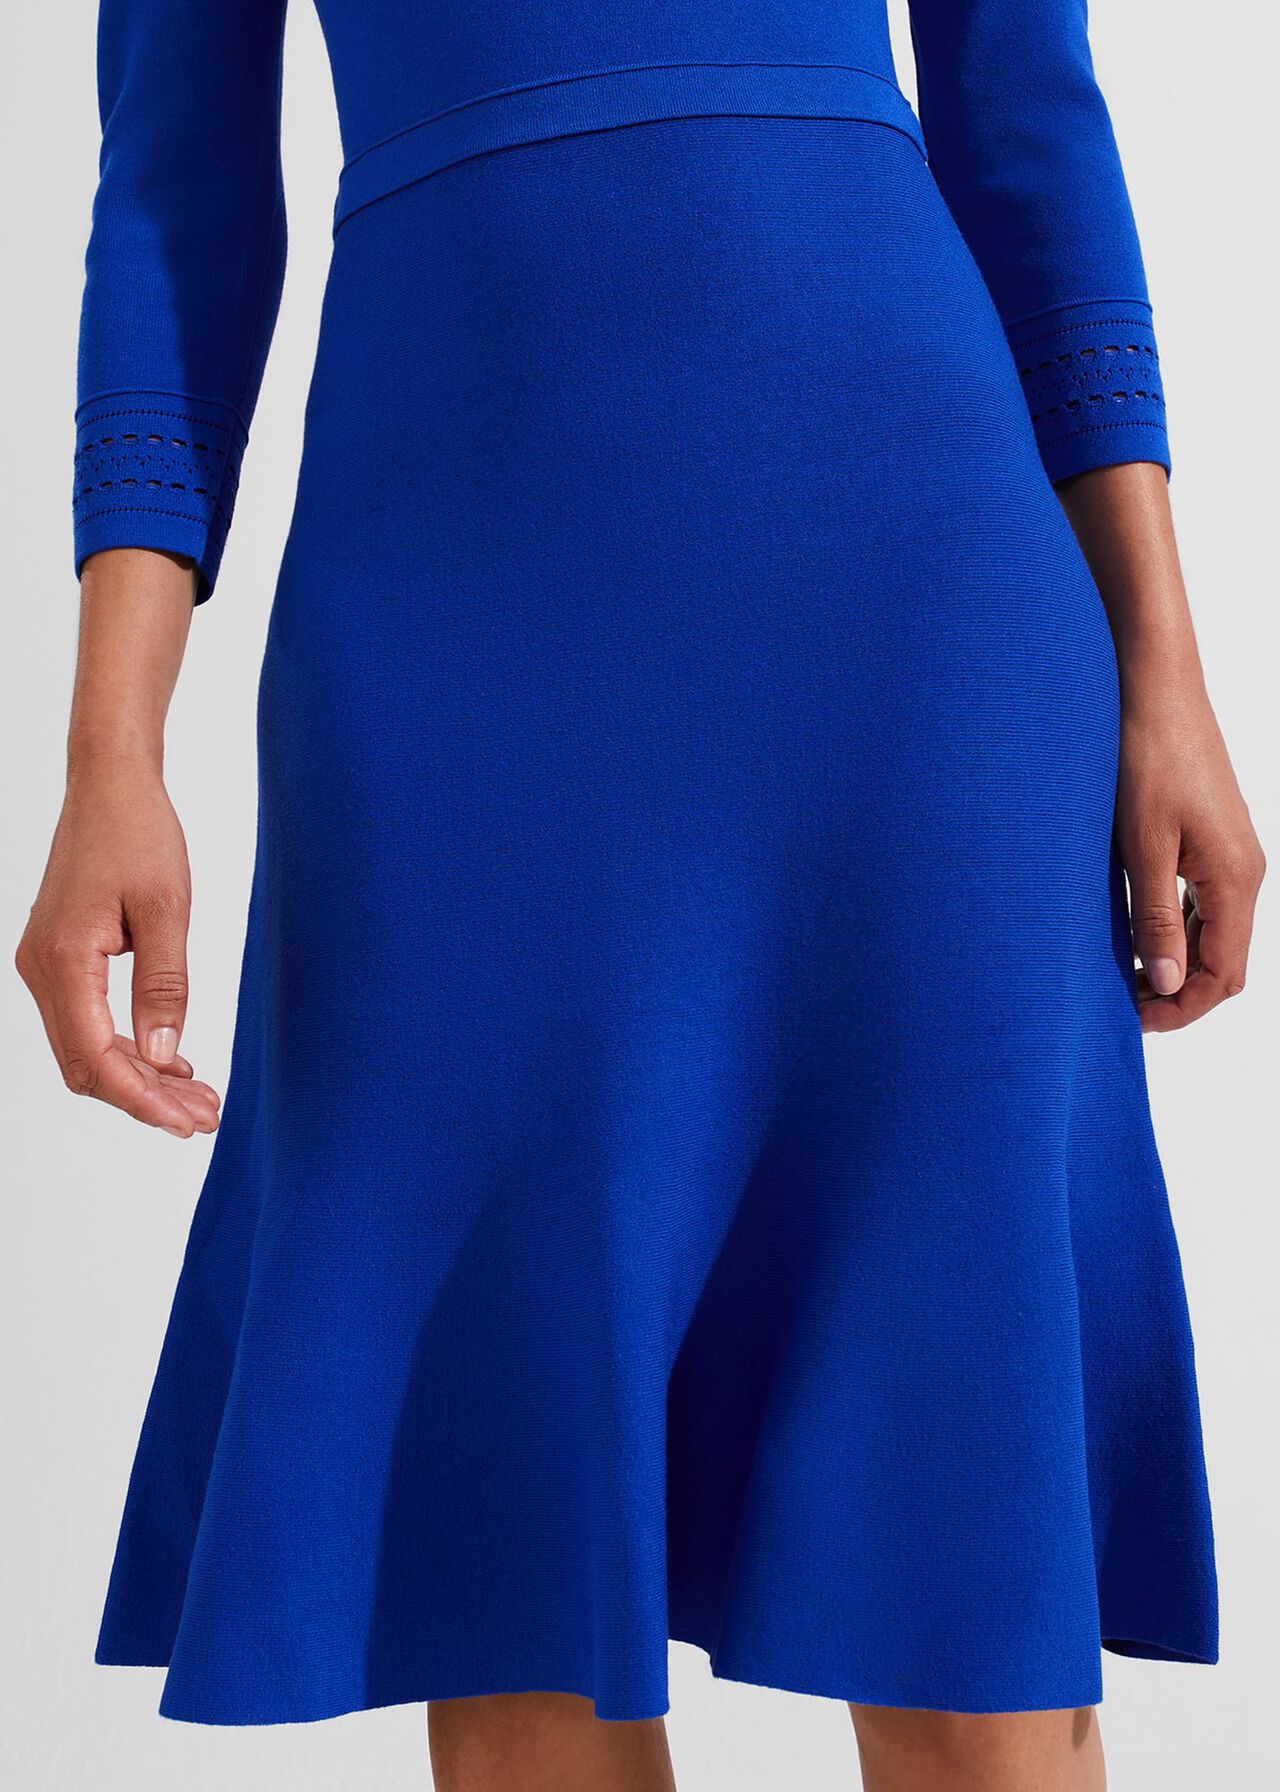 Quinn Knitted Dress, Egyptian Blue, hi-res